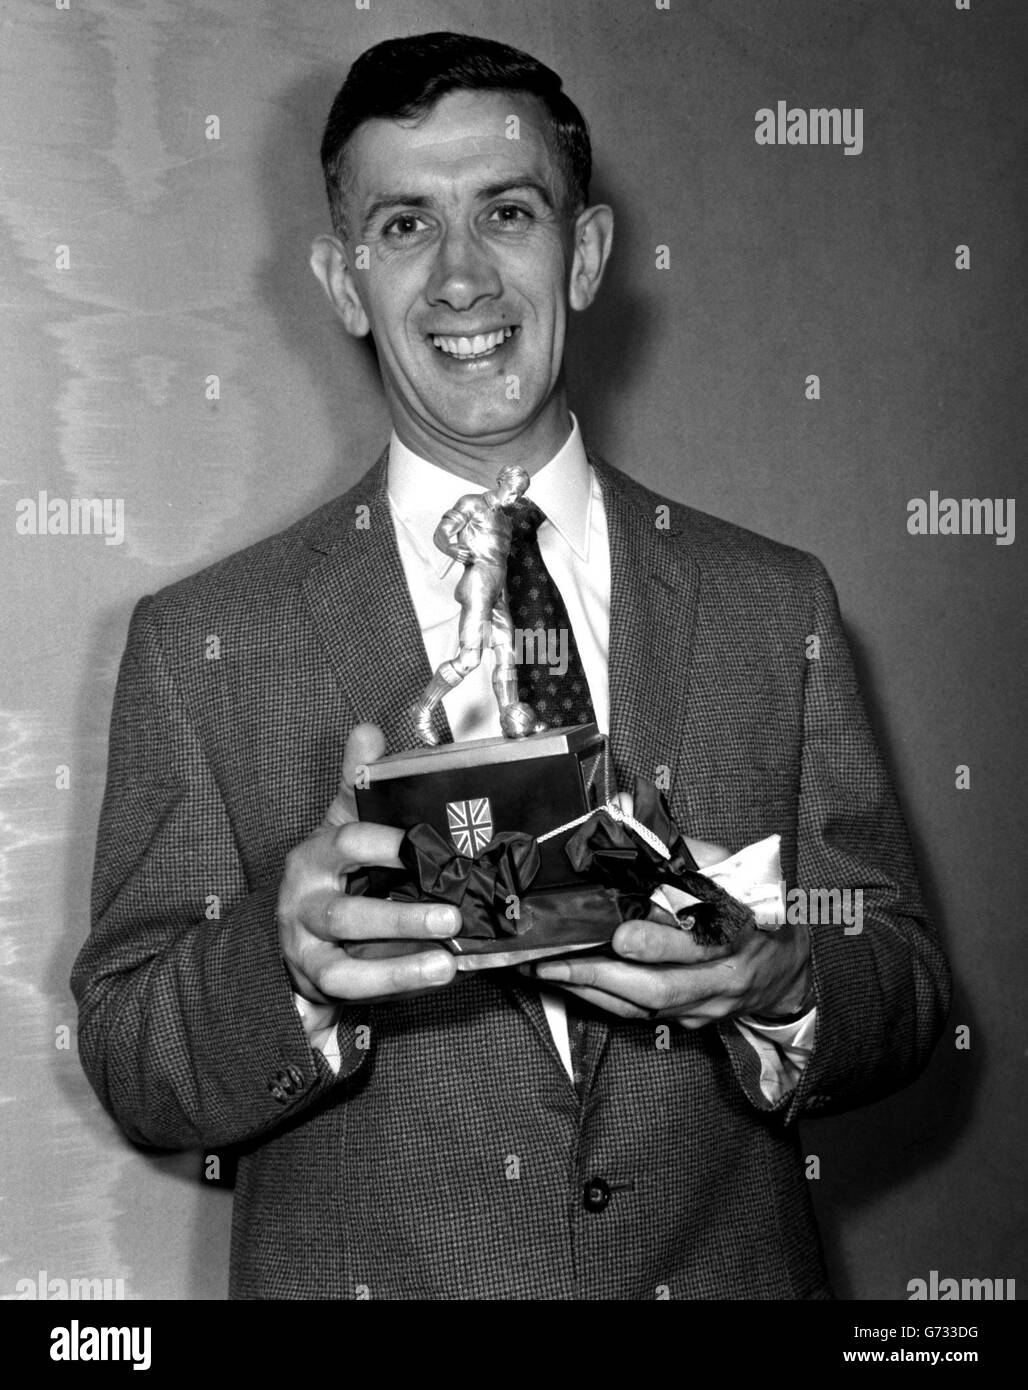 Jimmy Adamson Footballer of the Year 1962 Stock Photo - Alamy